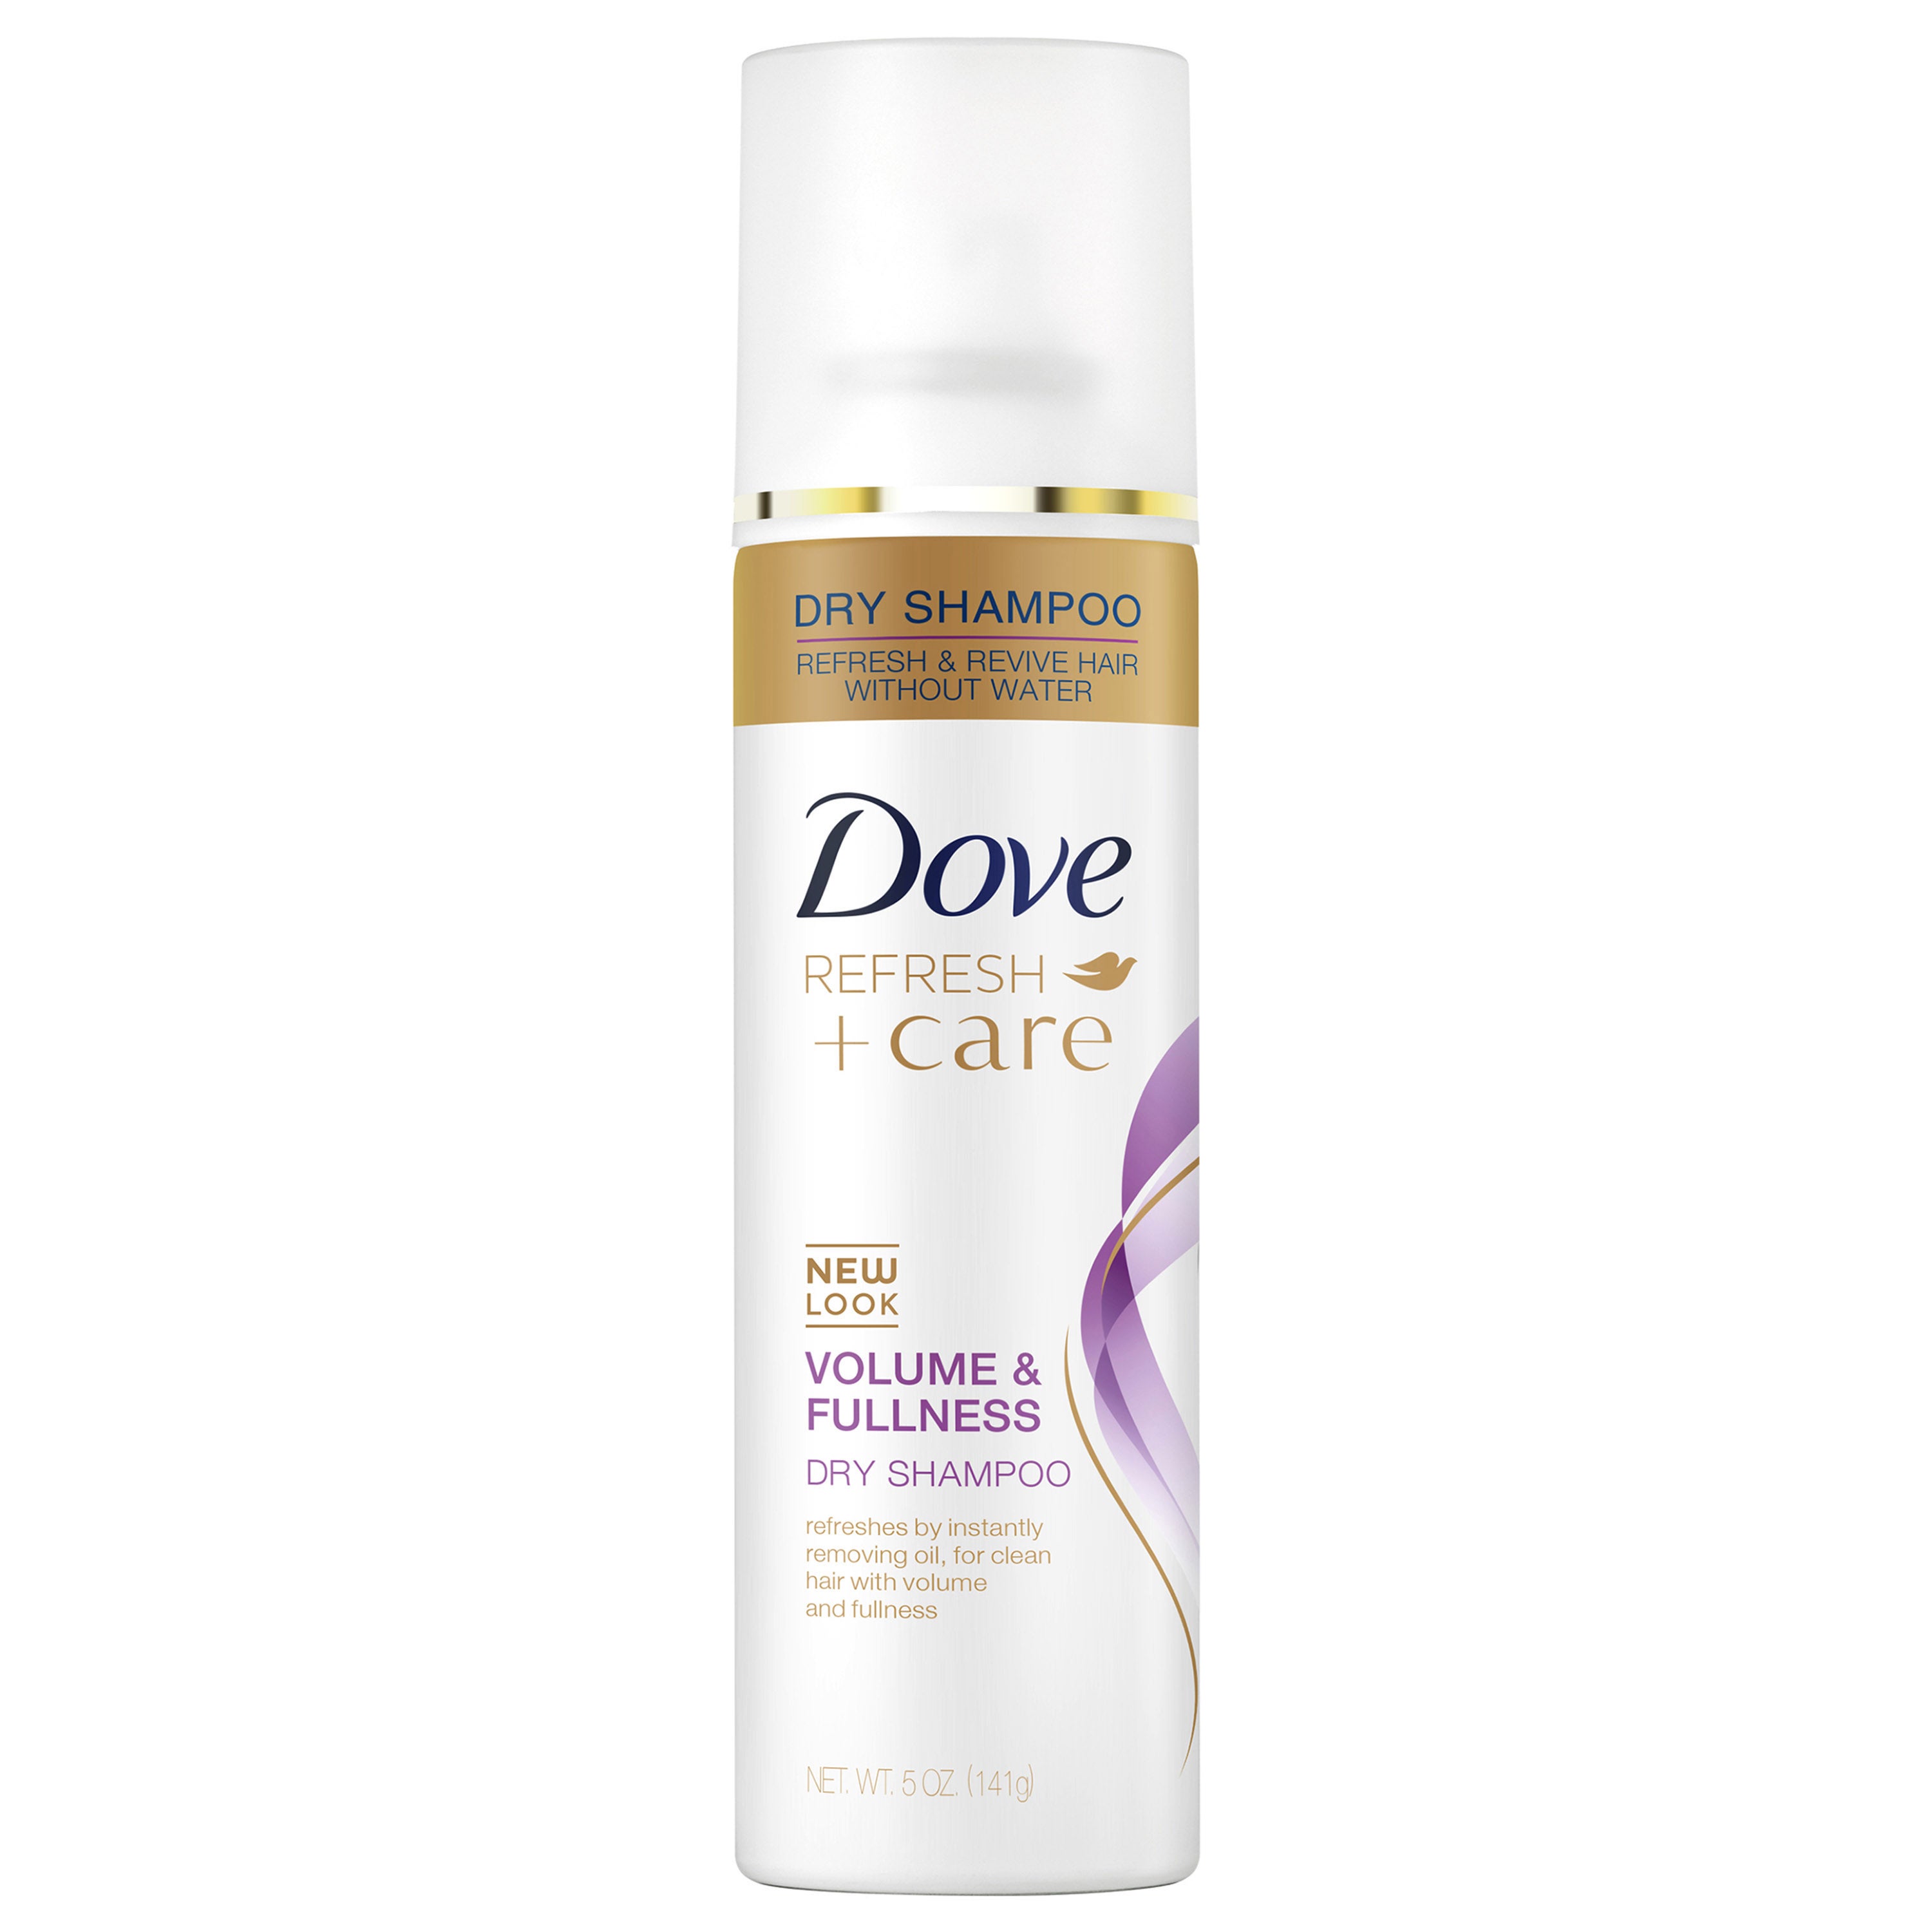 Dove Refresh+Care Volume _ Fullness Dry Shampoo